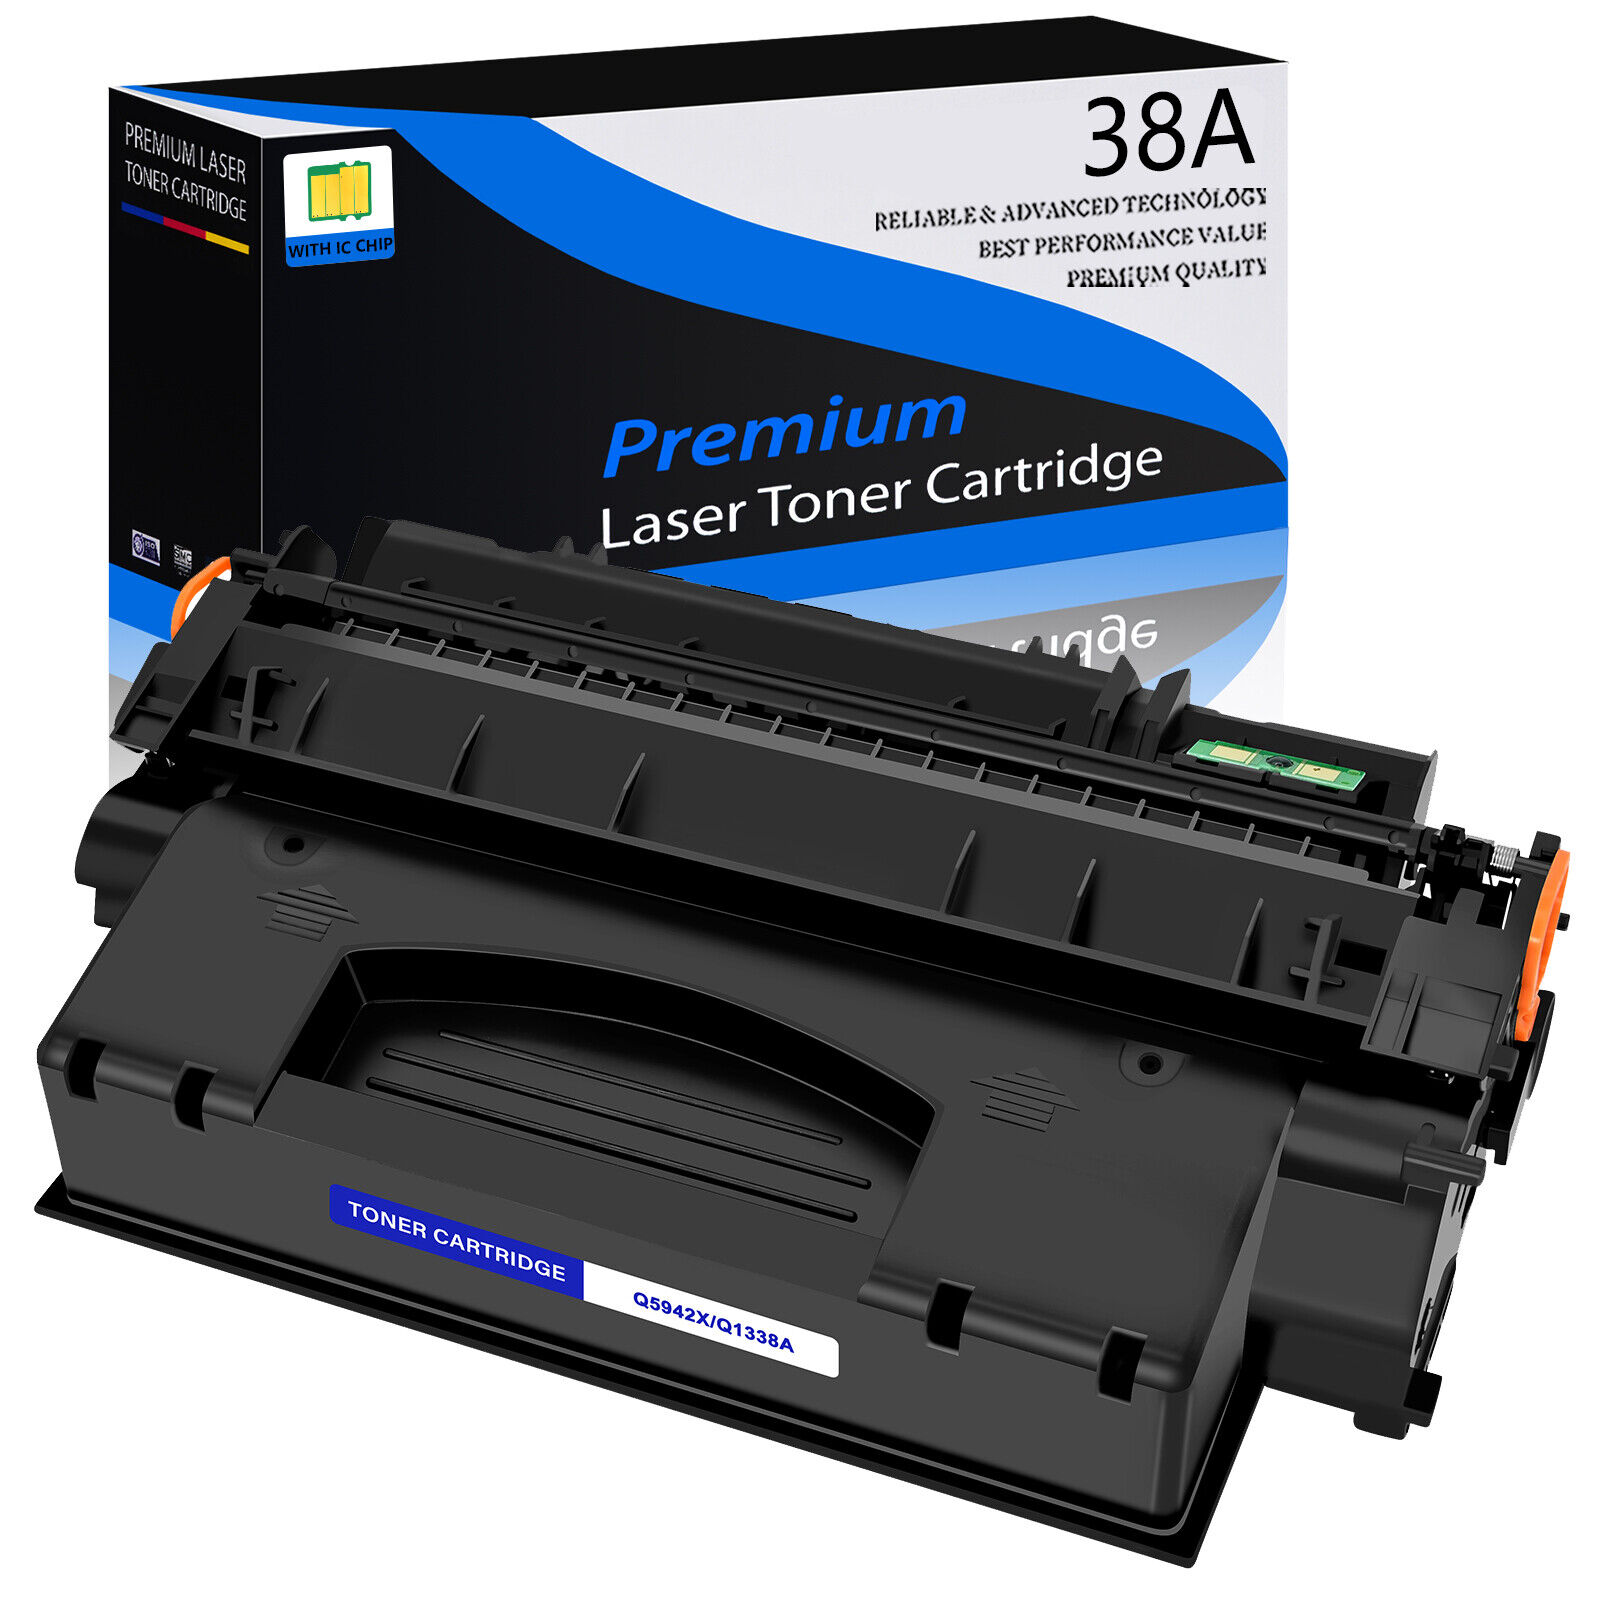 1PK High Yield Q1338A Black Toner Cartridge for HP LaserJet 4200 4200n 4200dtn